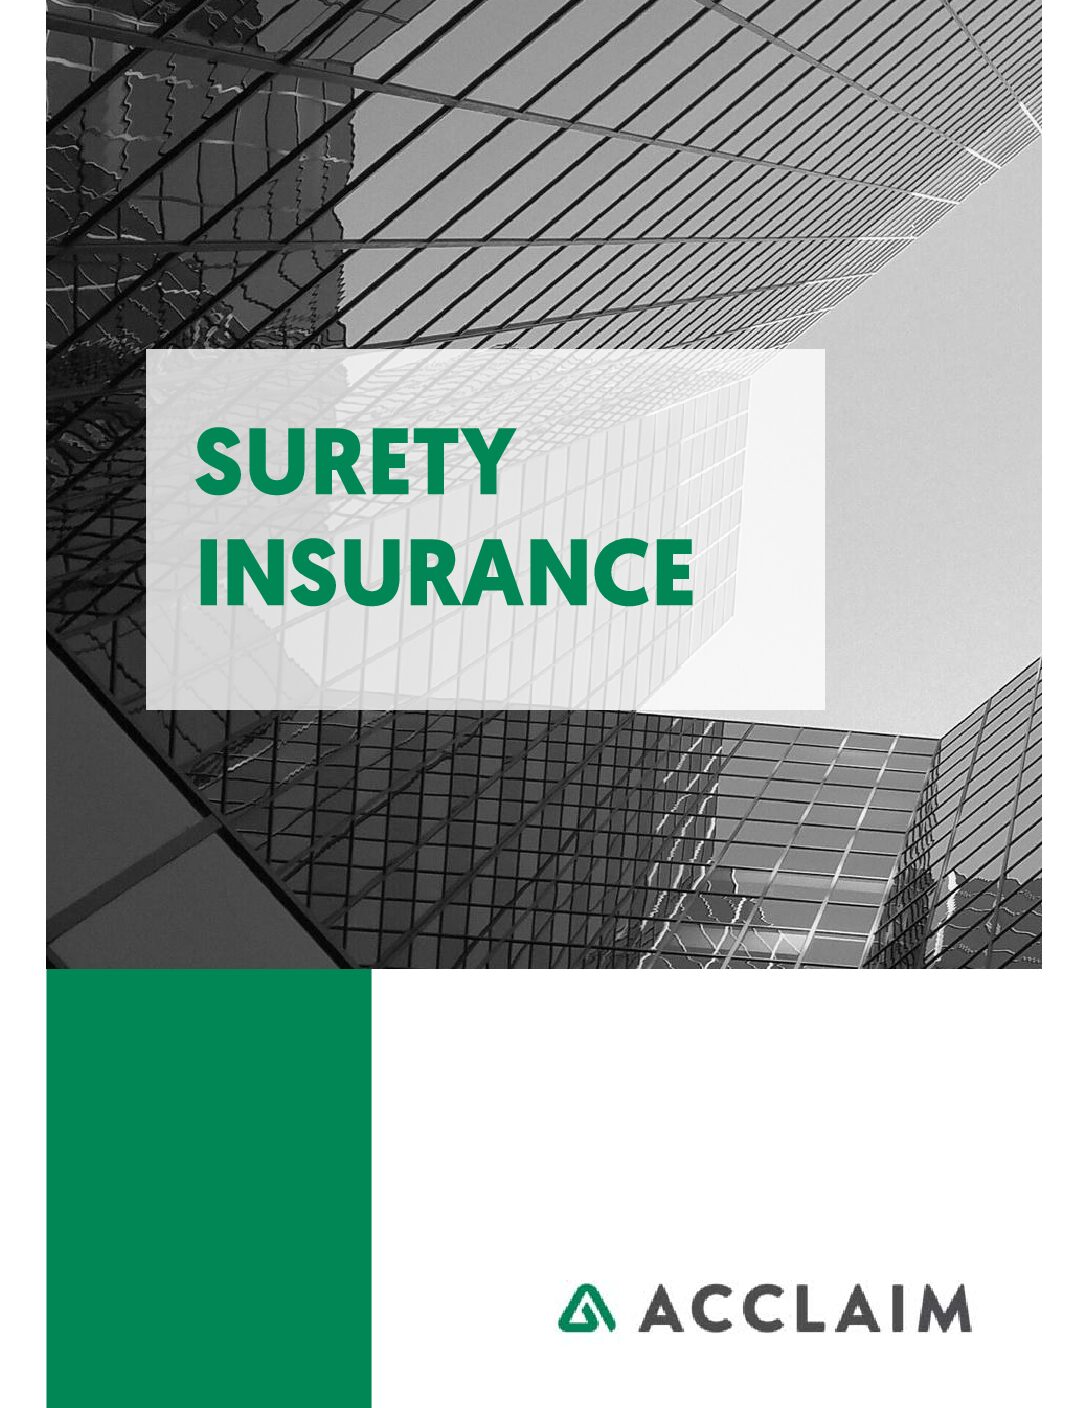 Acclaim Surety Insurance Brochure page 1 pdf